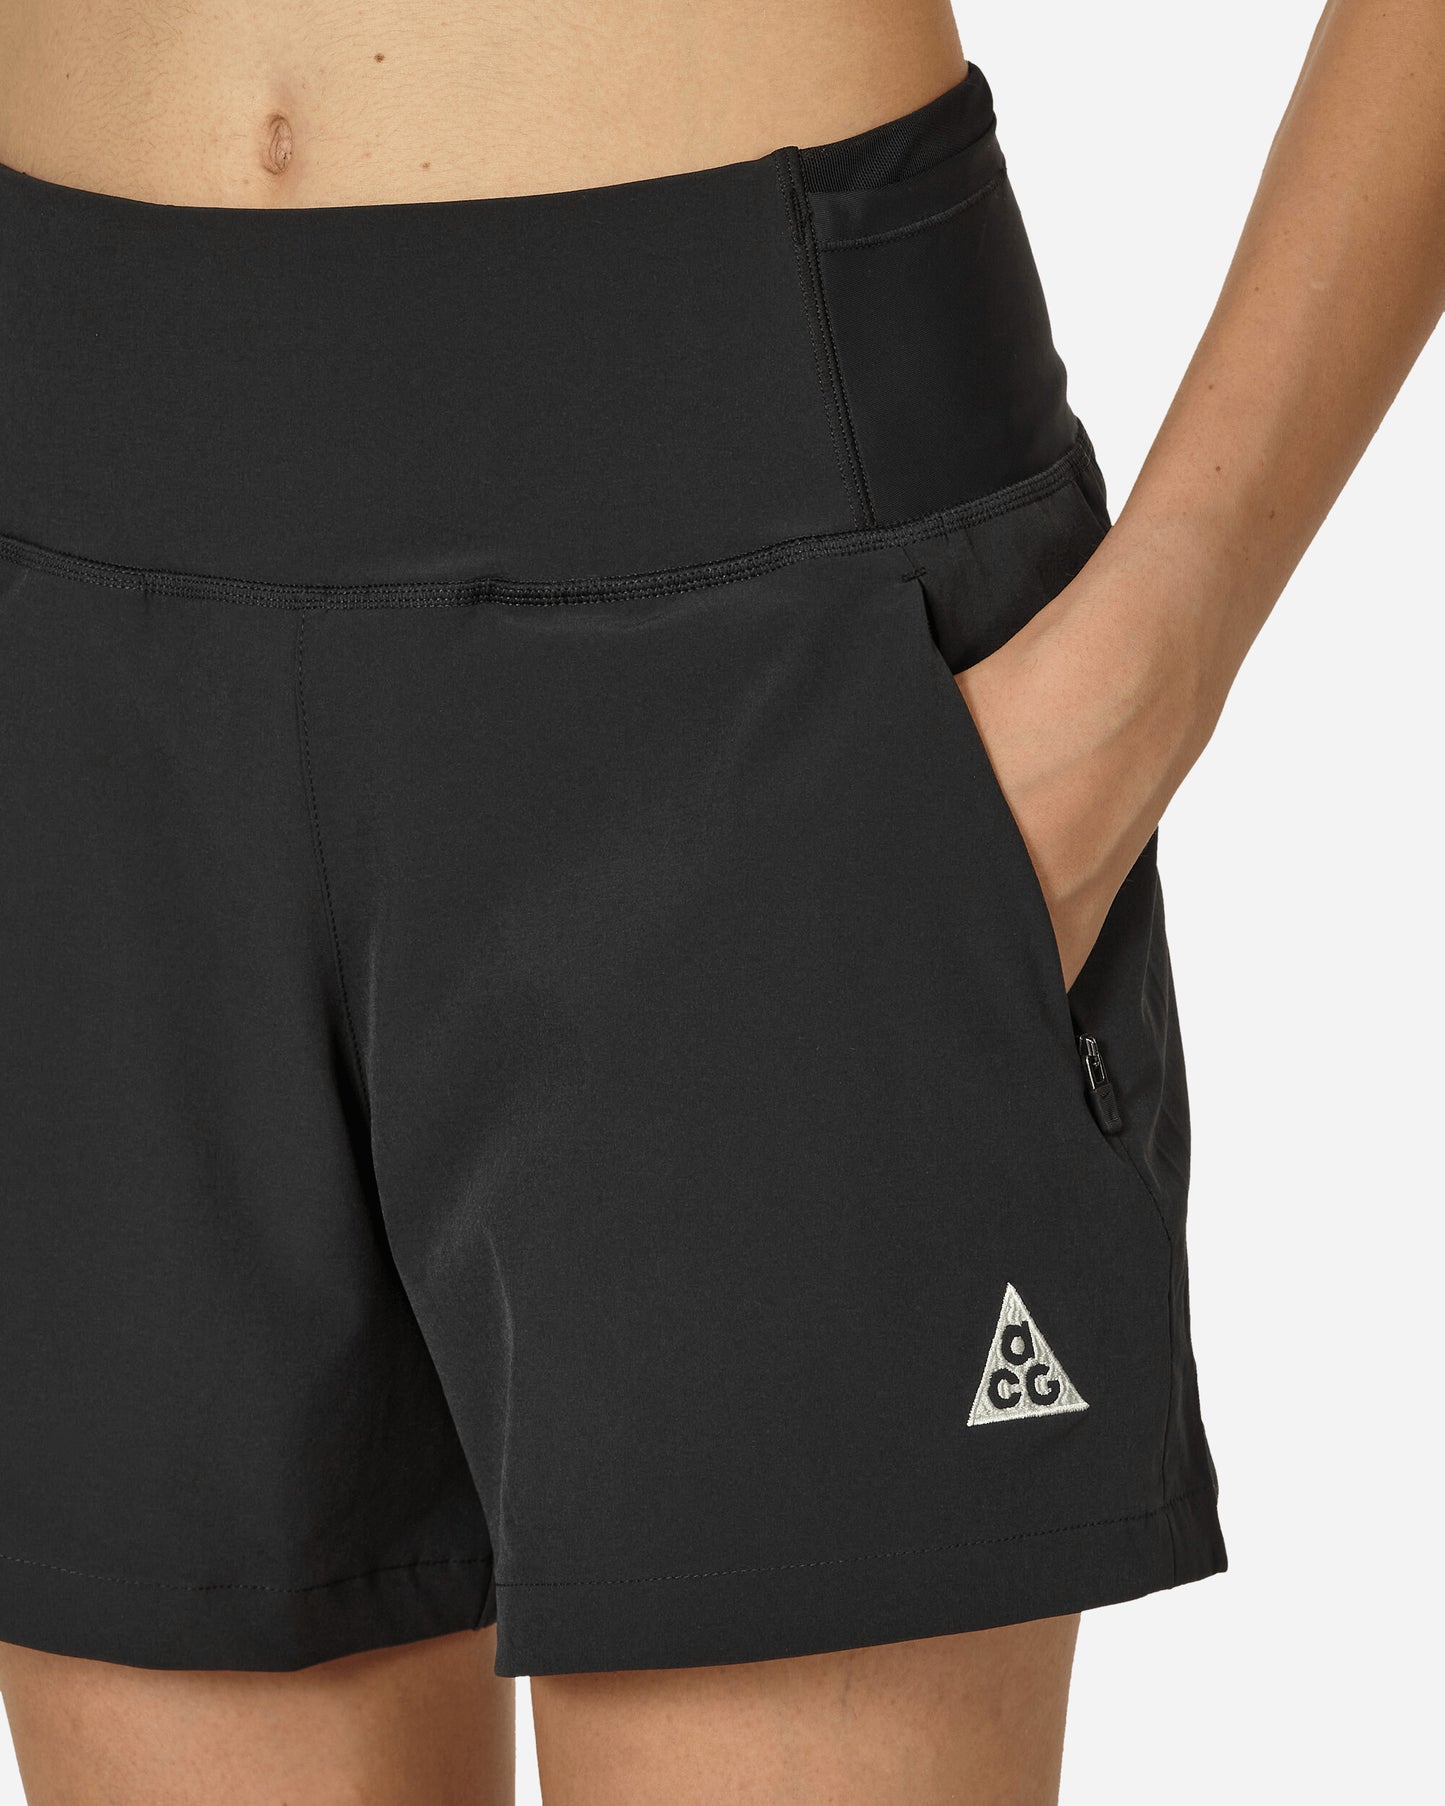 Nike Wmns Acg Df New Sands Short Black/Summit White Shorts Short DV9530-010